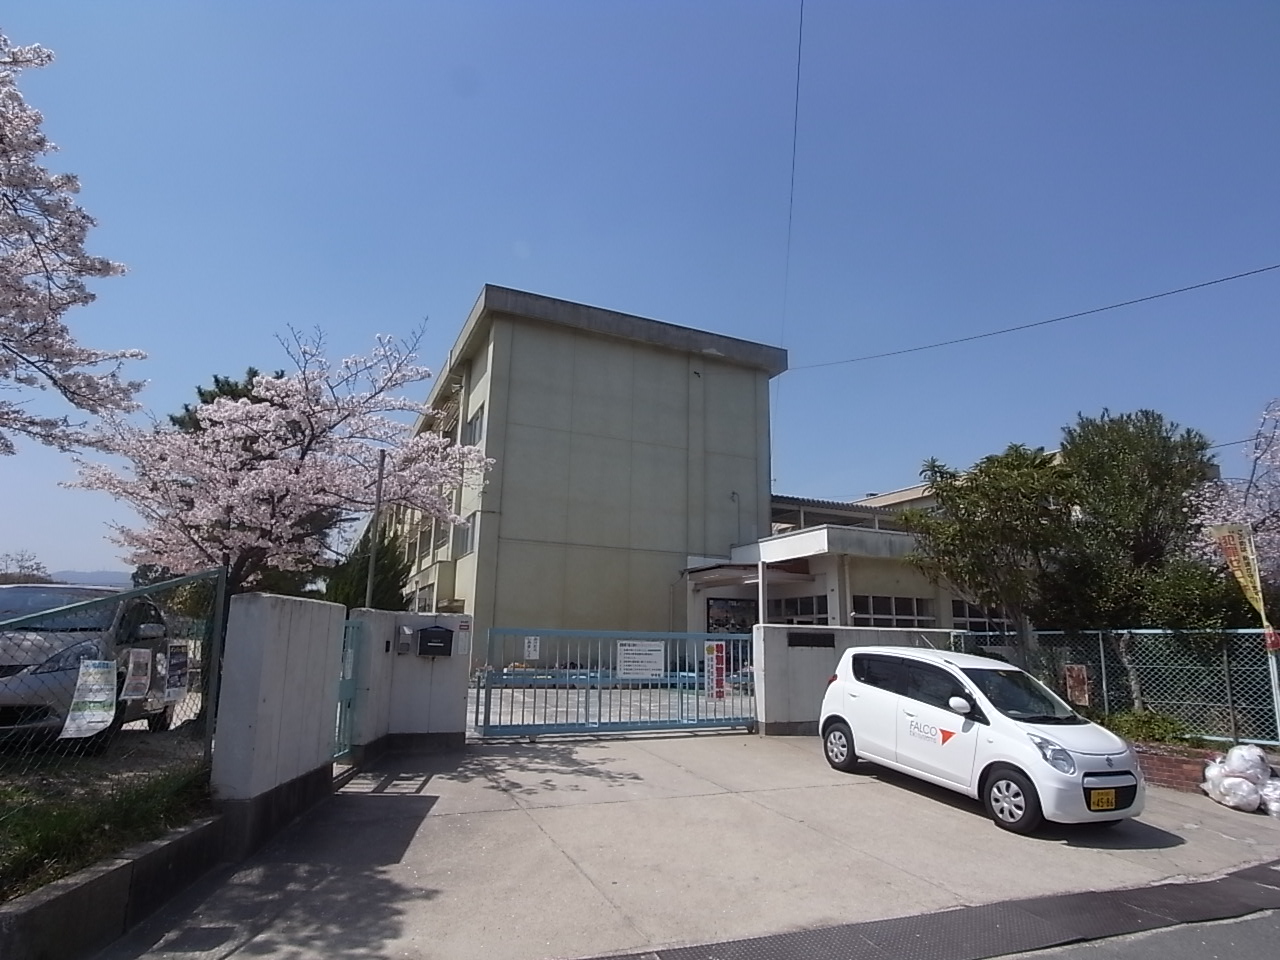 Primary school. Fushimi up to elementary school (elementary school) 361m